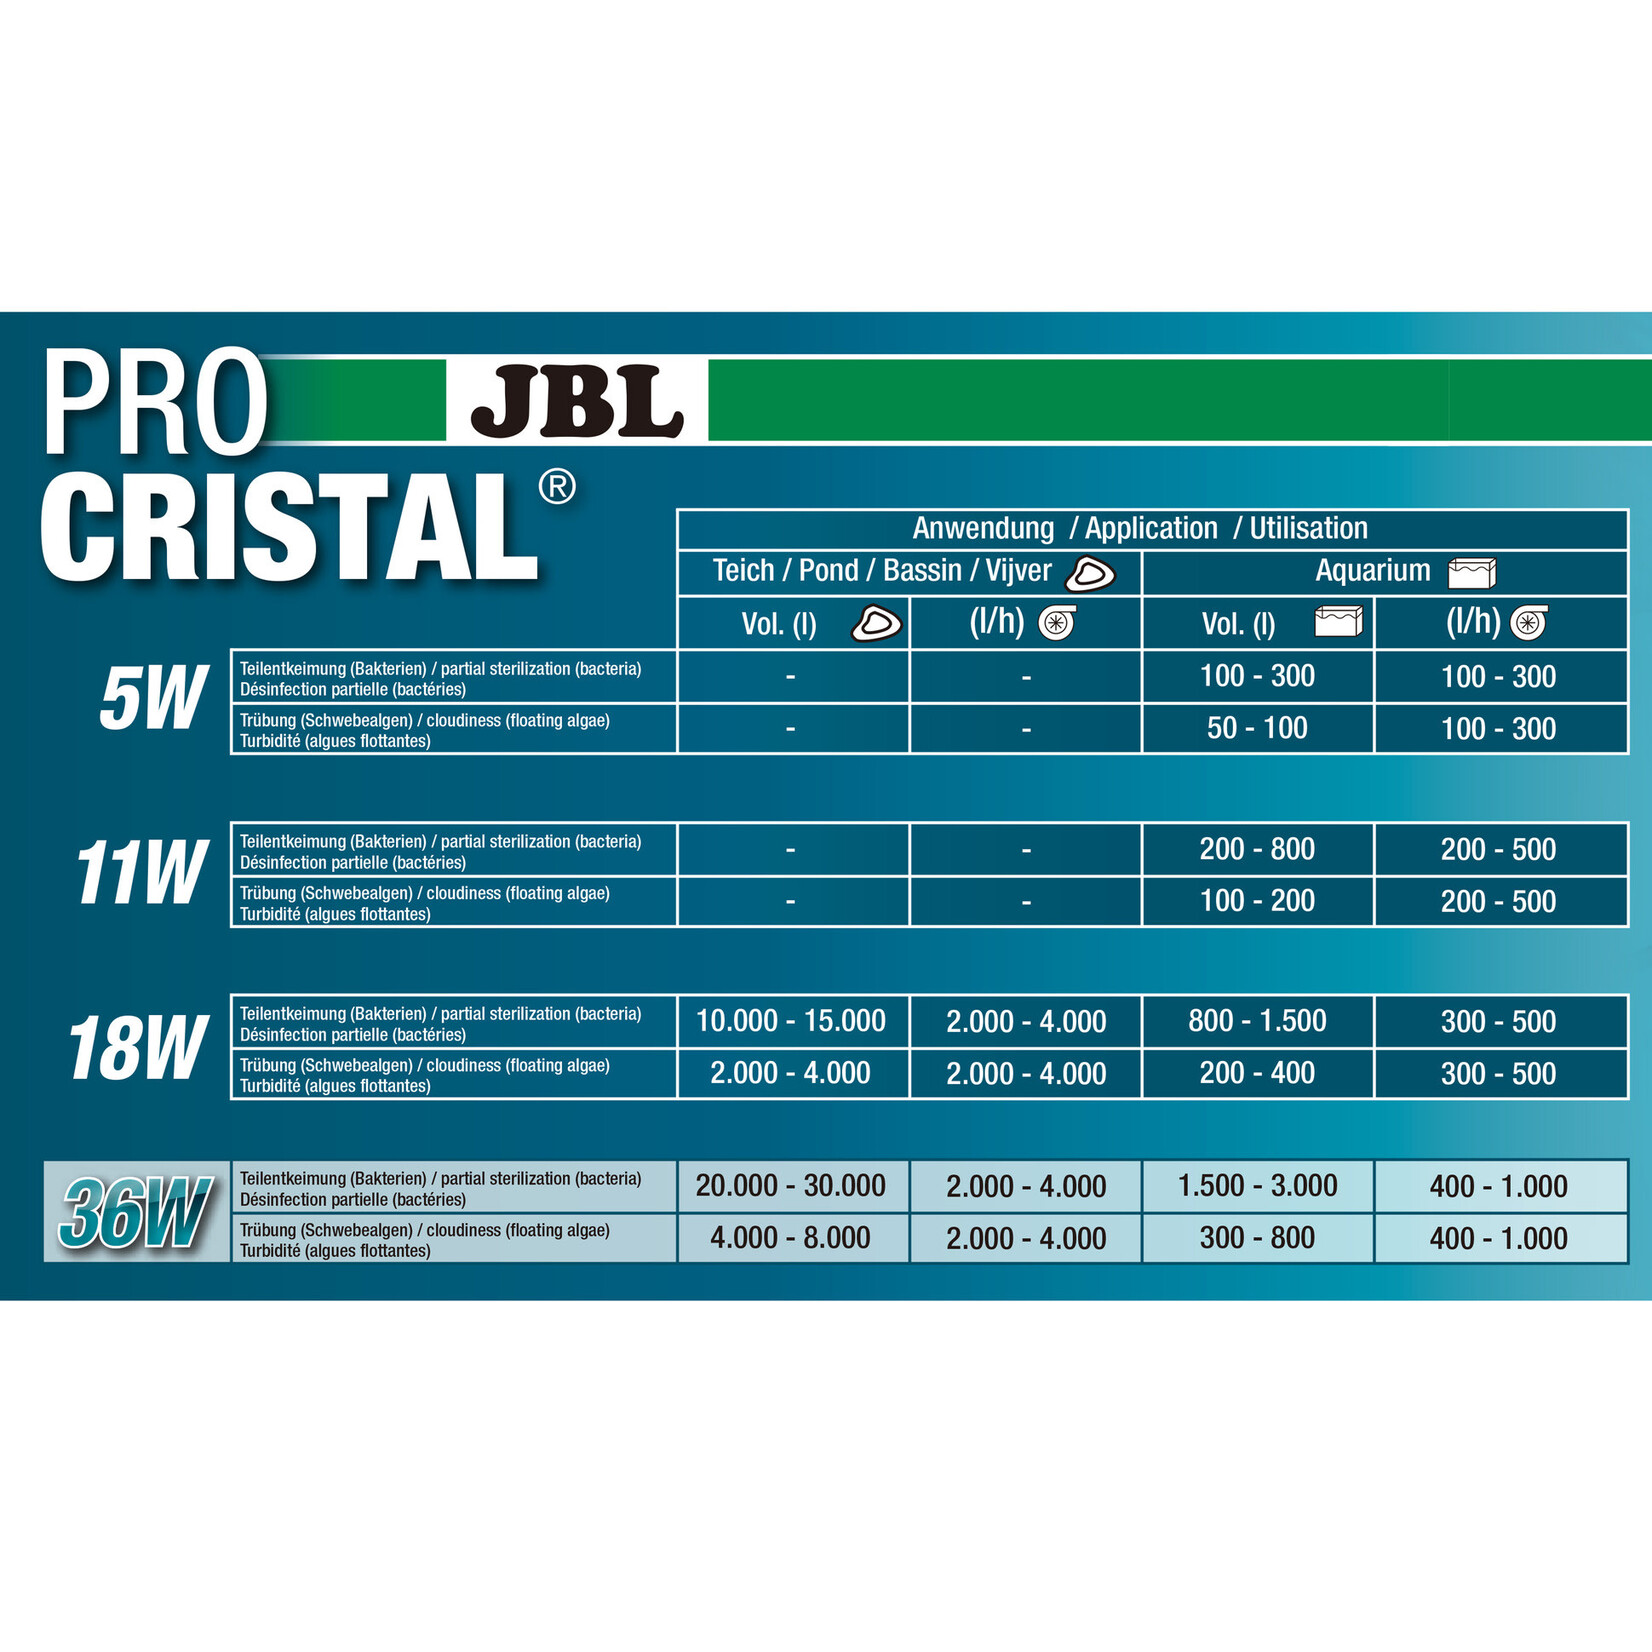 JBL Procristal UV-C Compact plus 18W